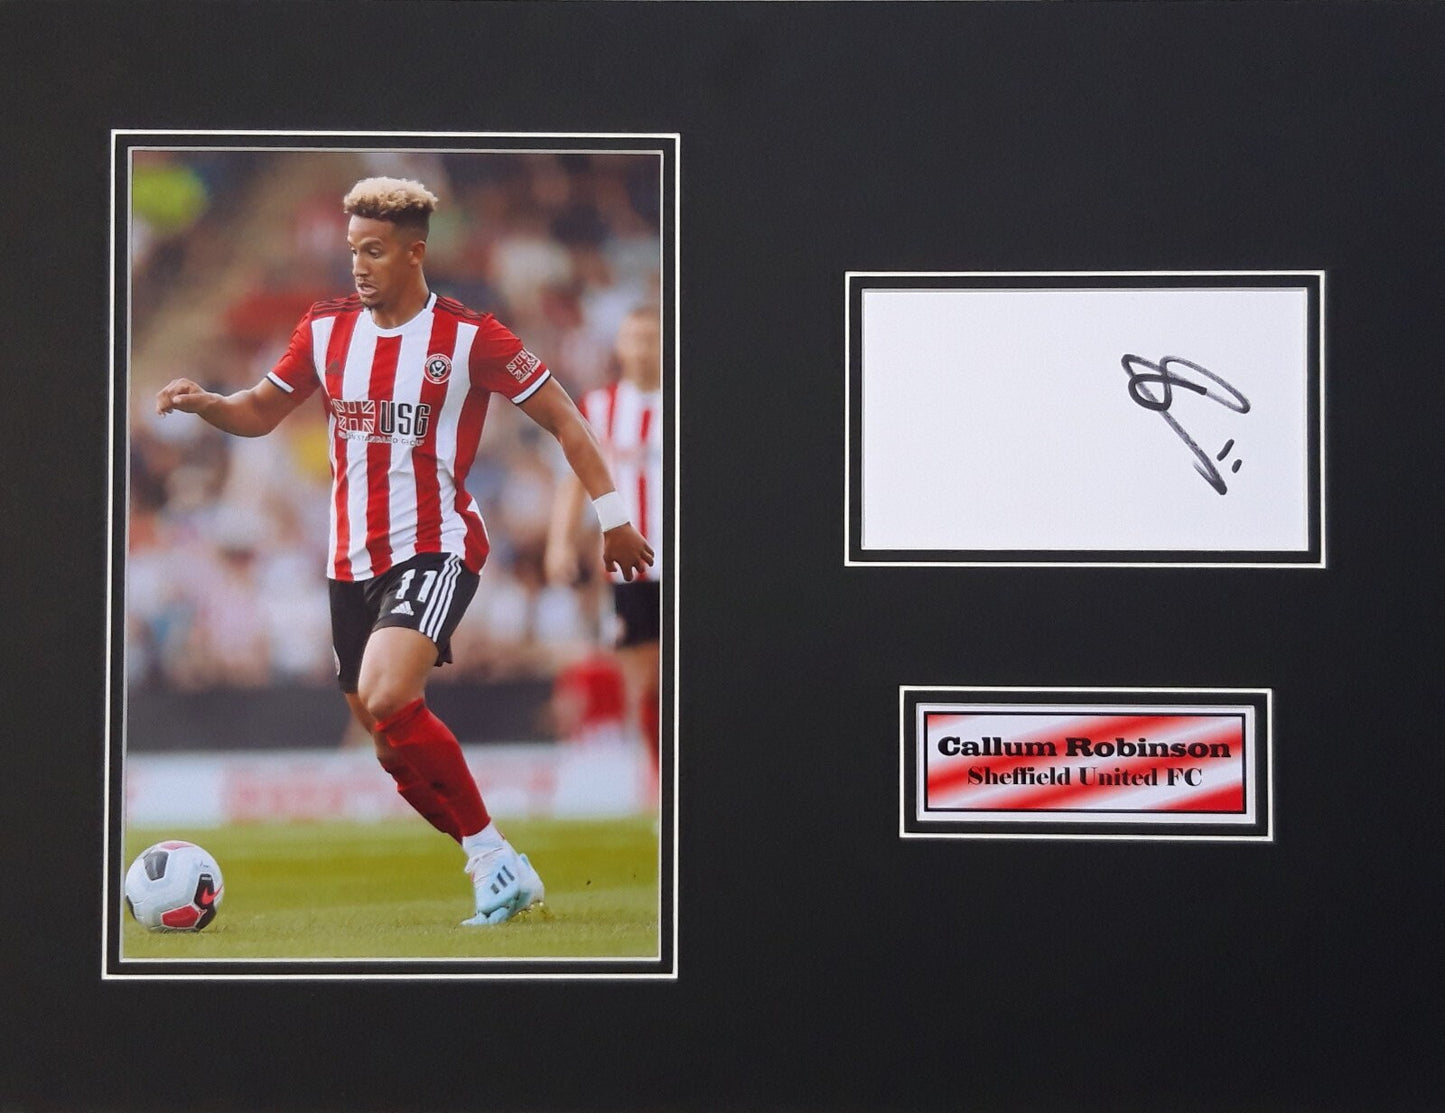 Callum Robinson - Sheffield United - 16x12in signed photo mount - Sheffield United memorabilia, gift, display